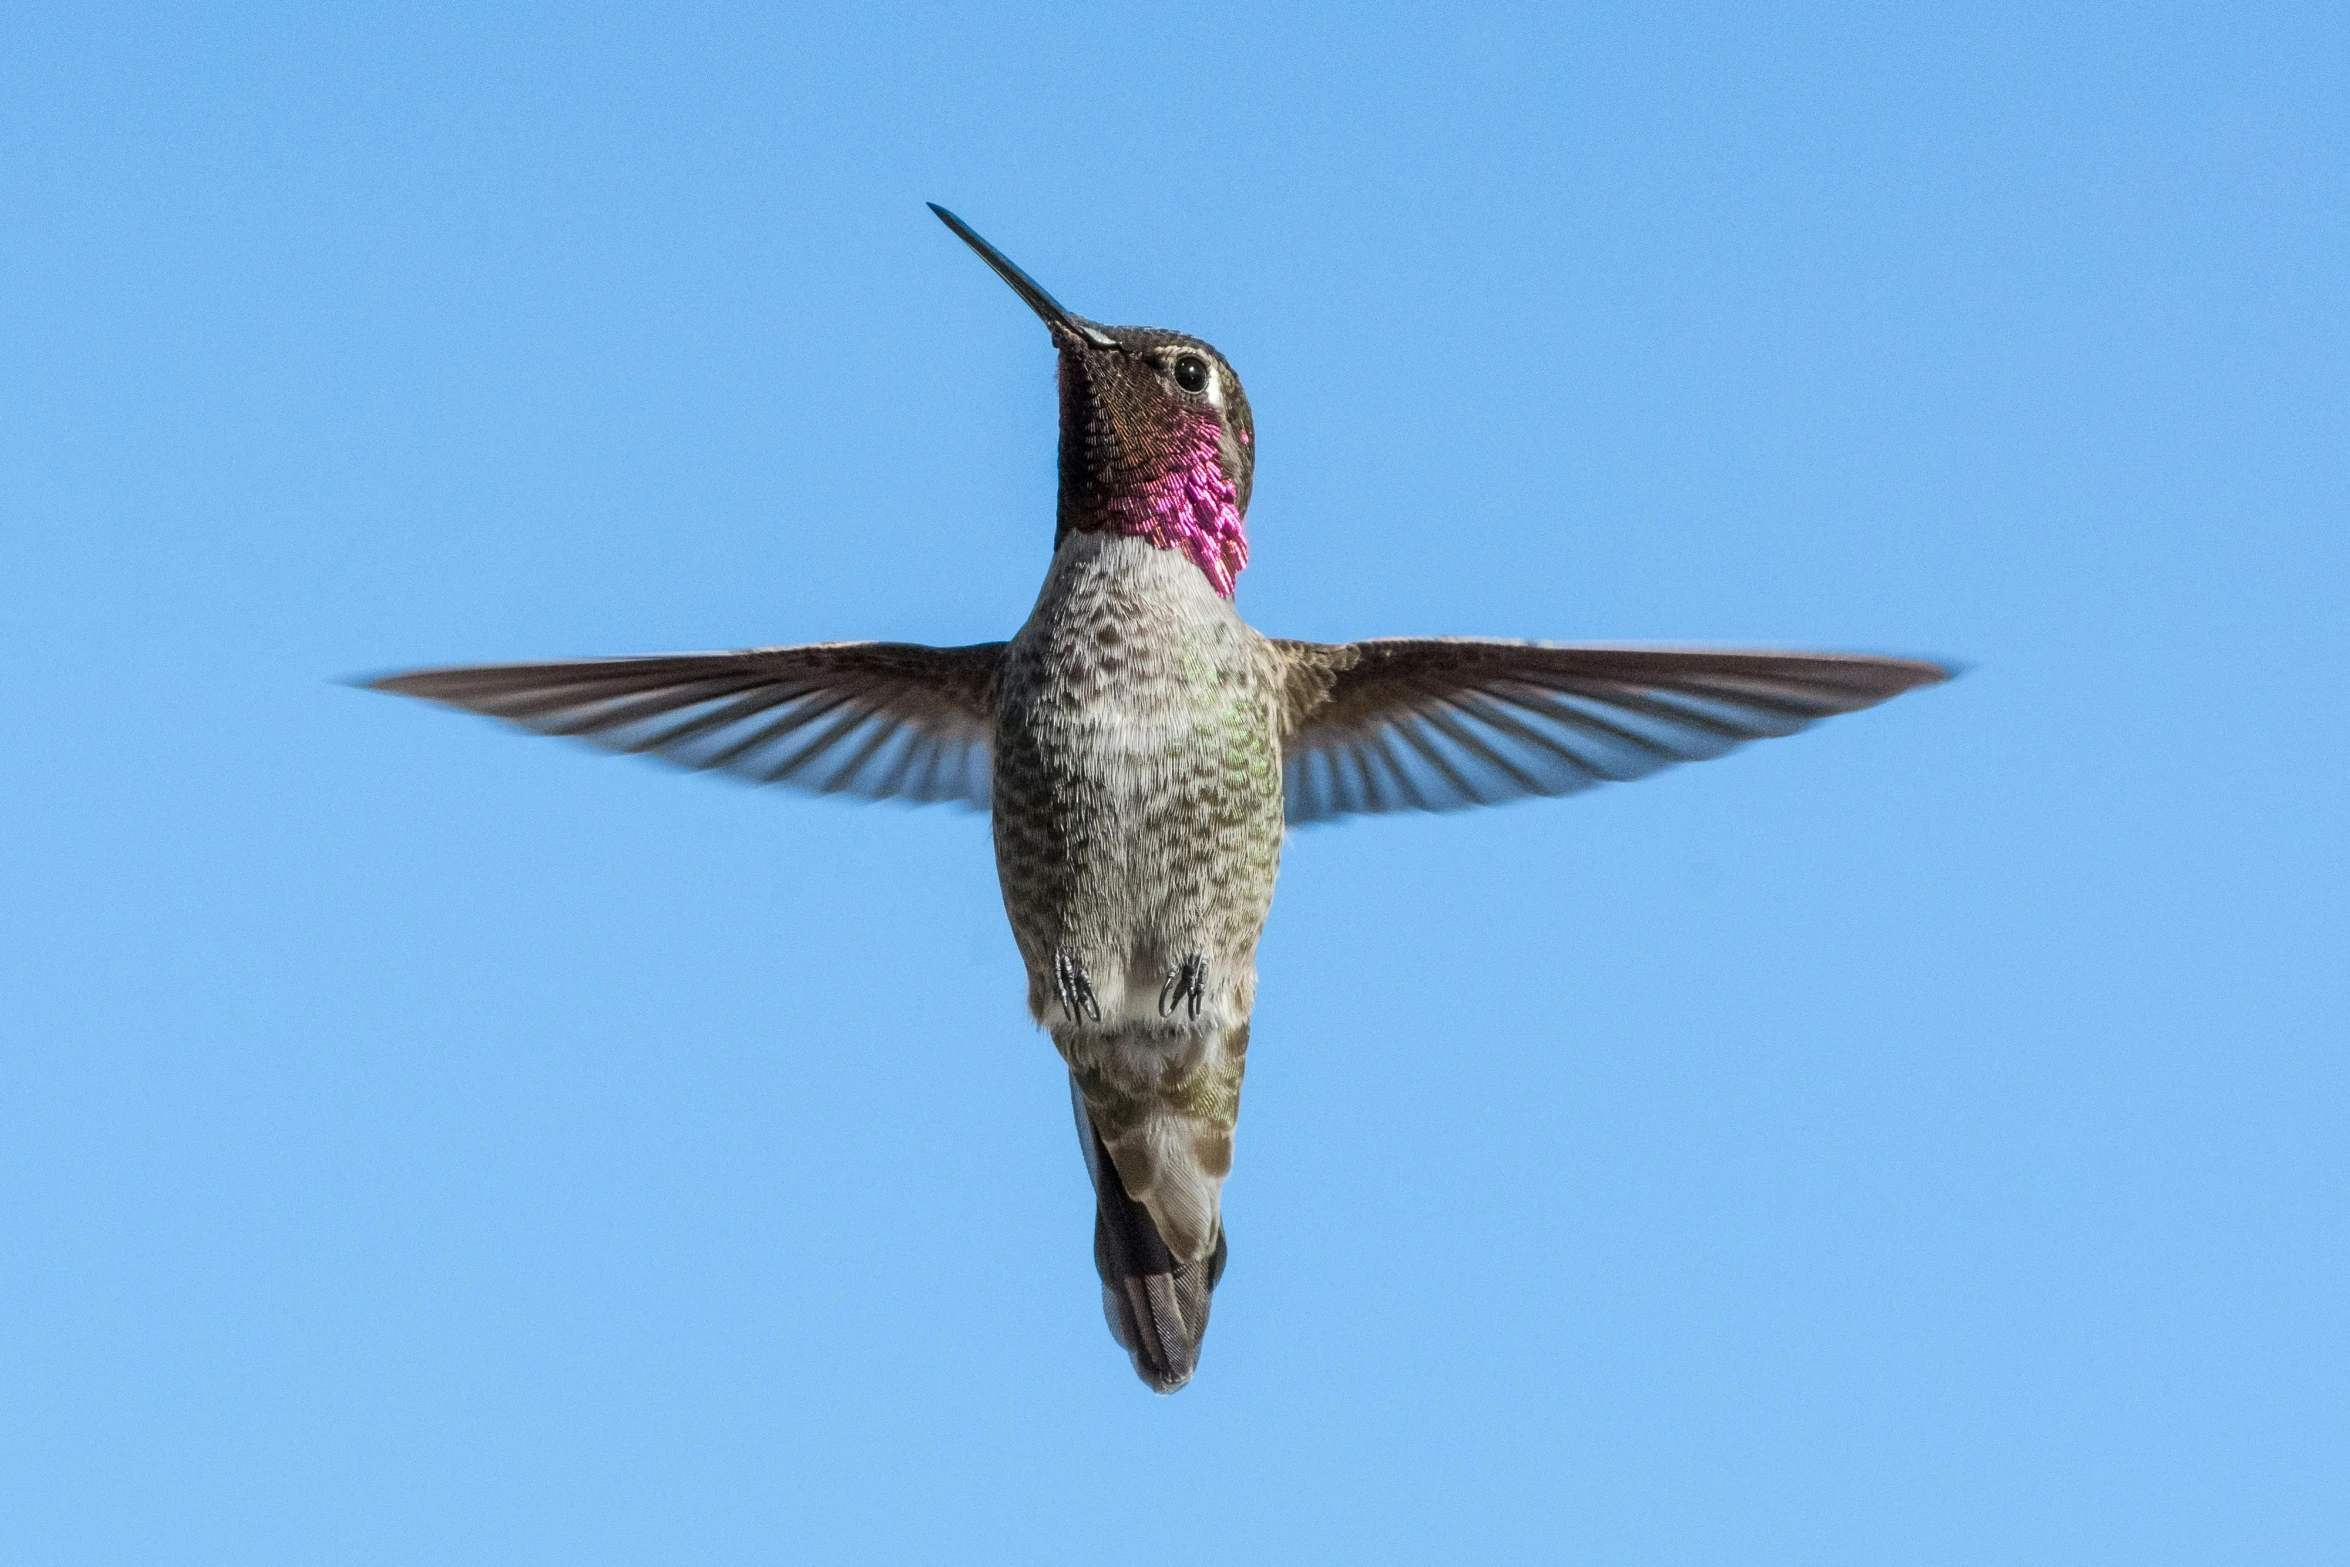 a humming bird flying through a blue sky